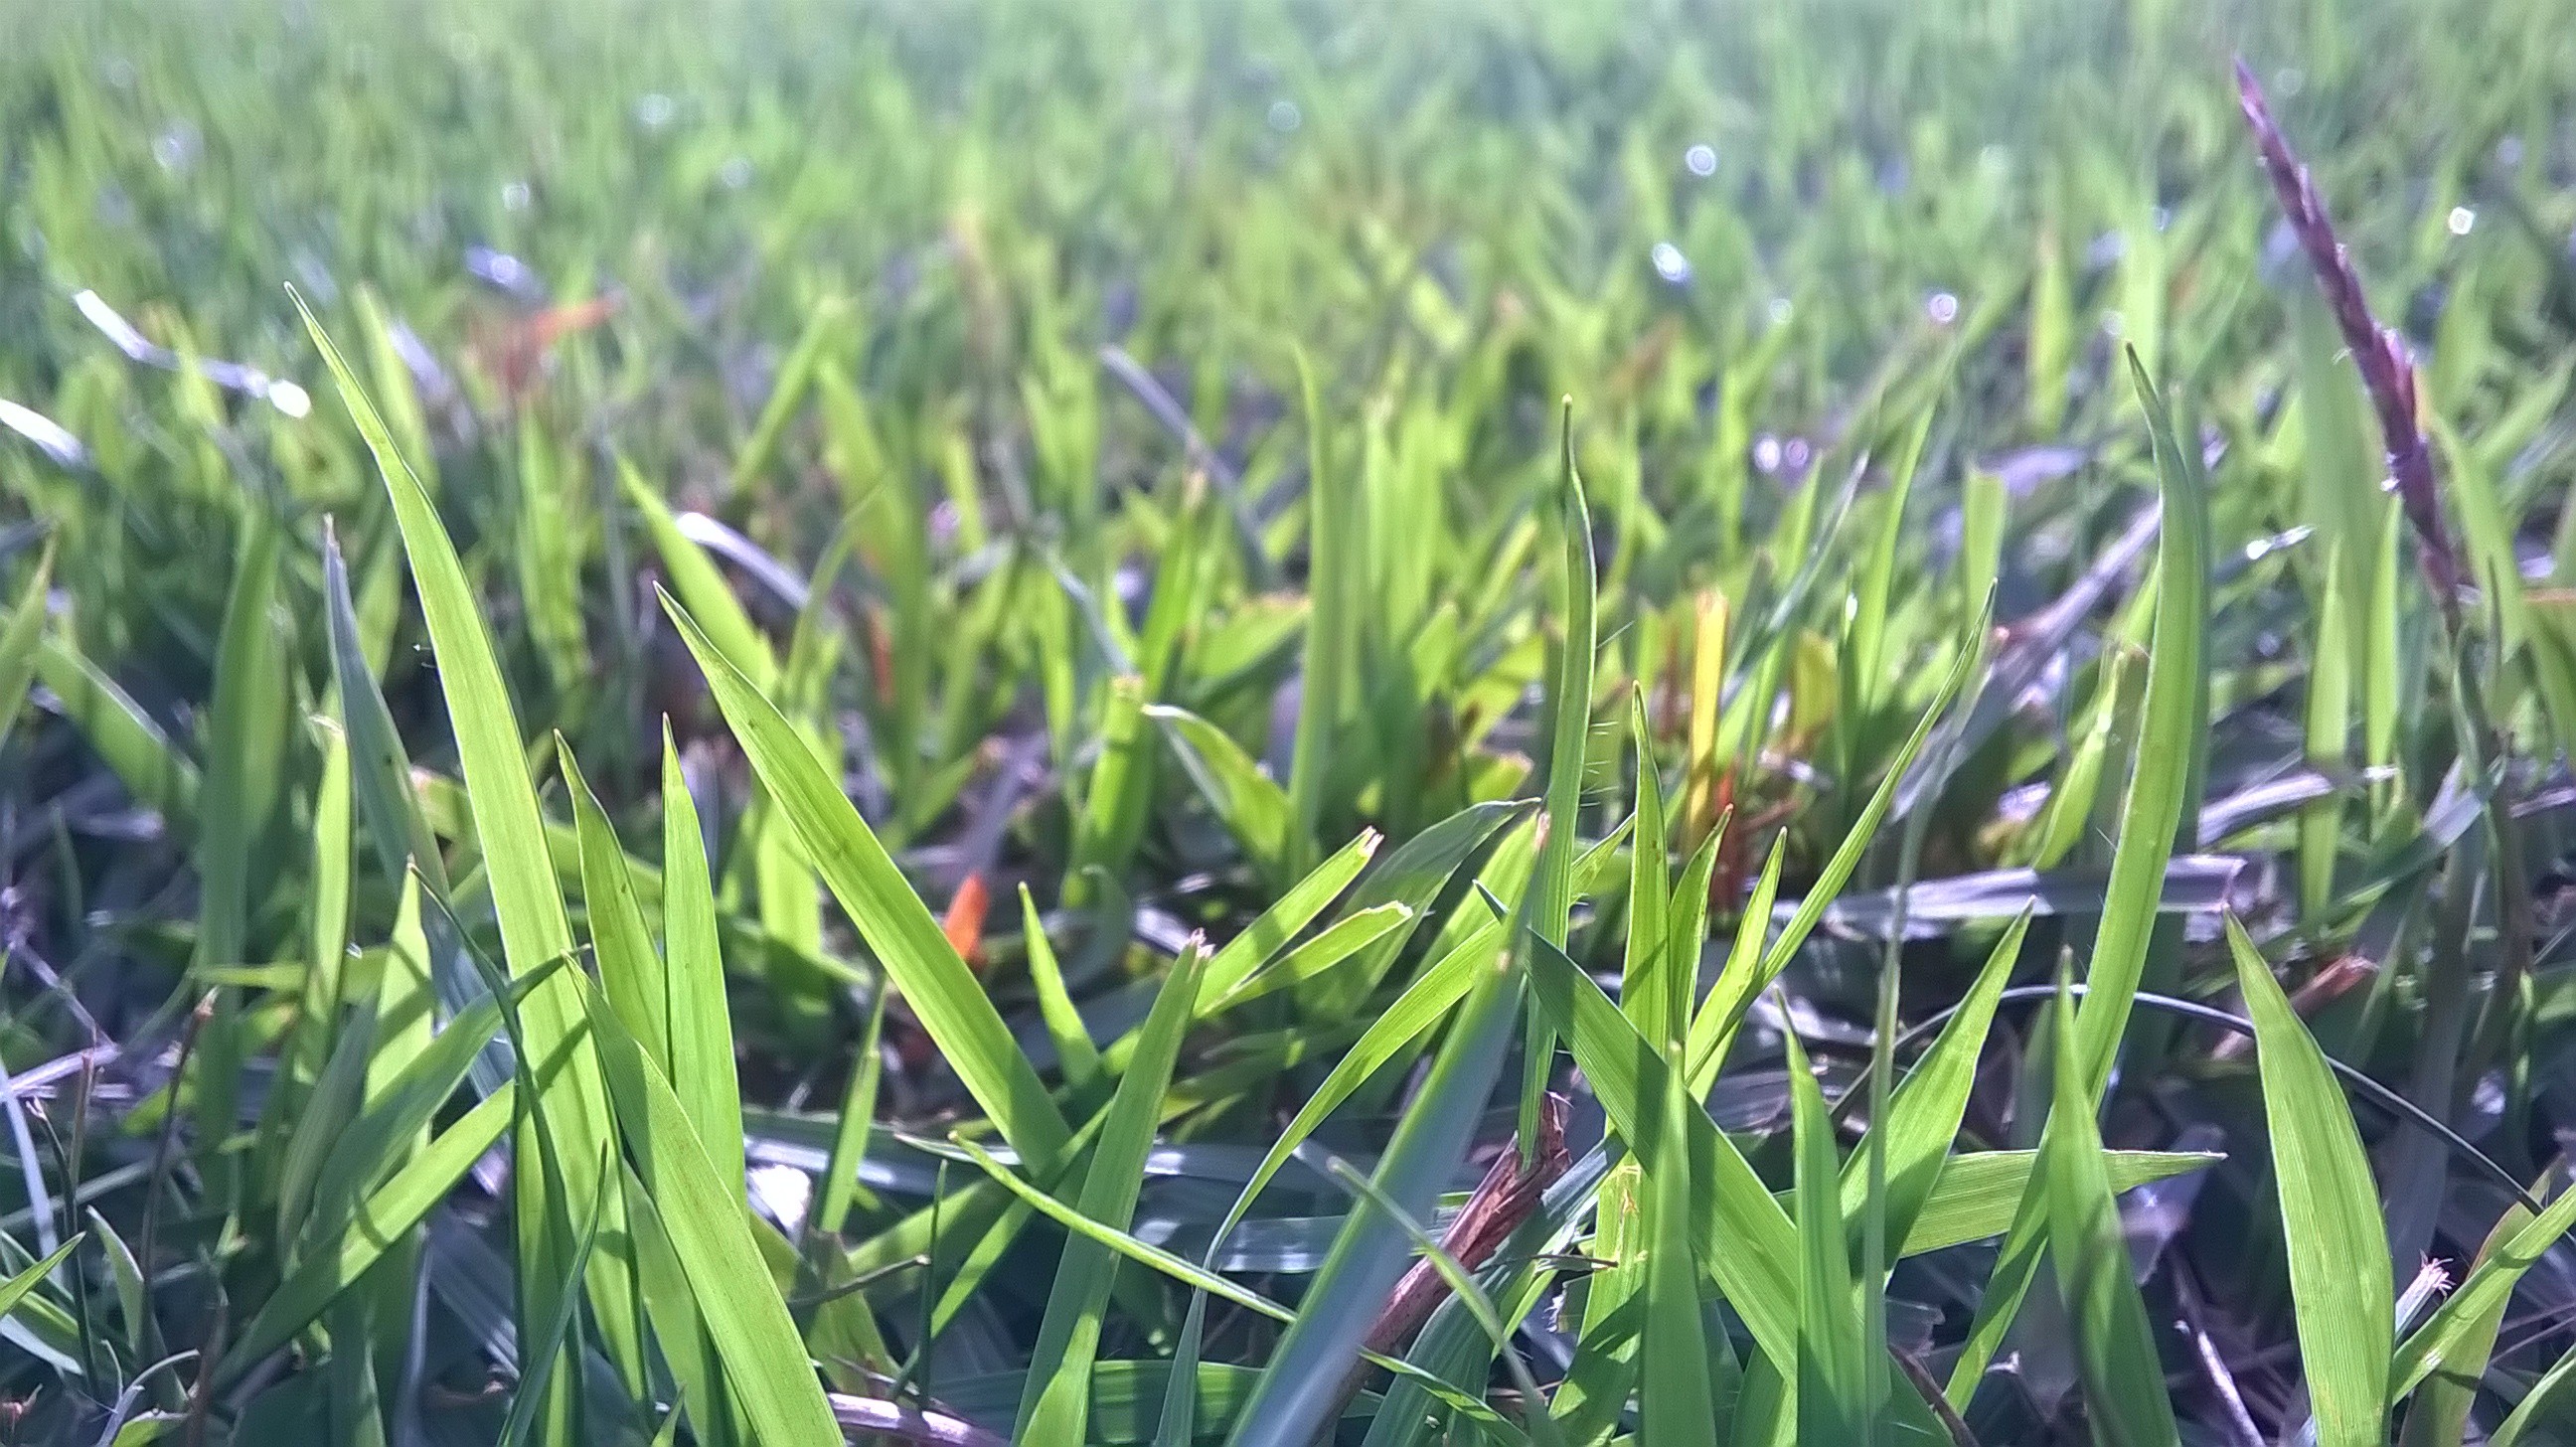 General 2592x1456 grass plants leaves outdoors closeup depth of field sunlight